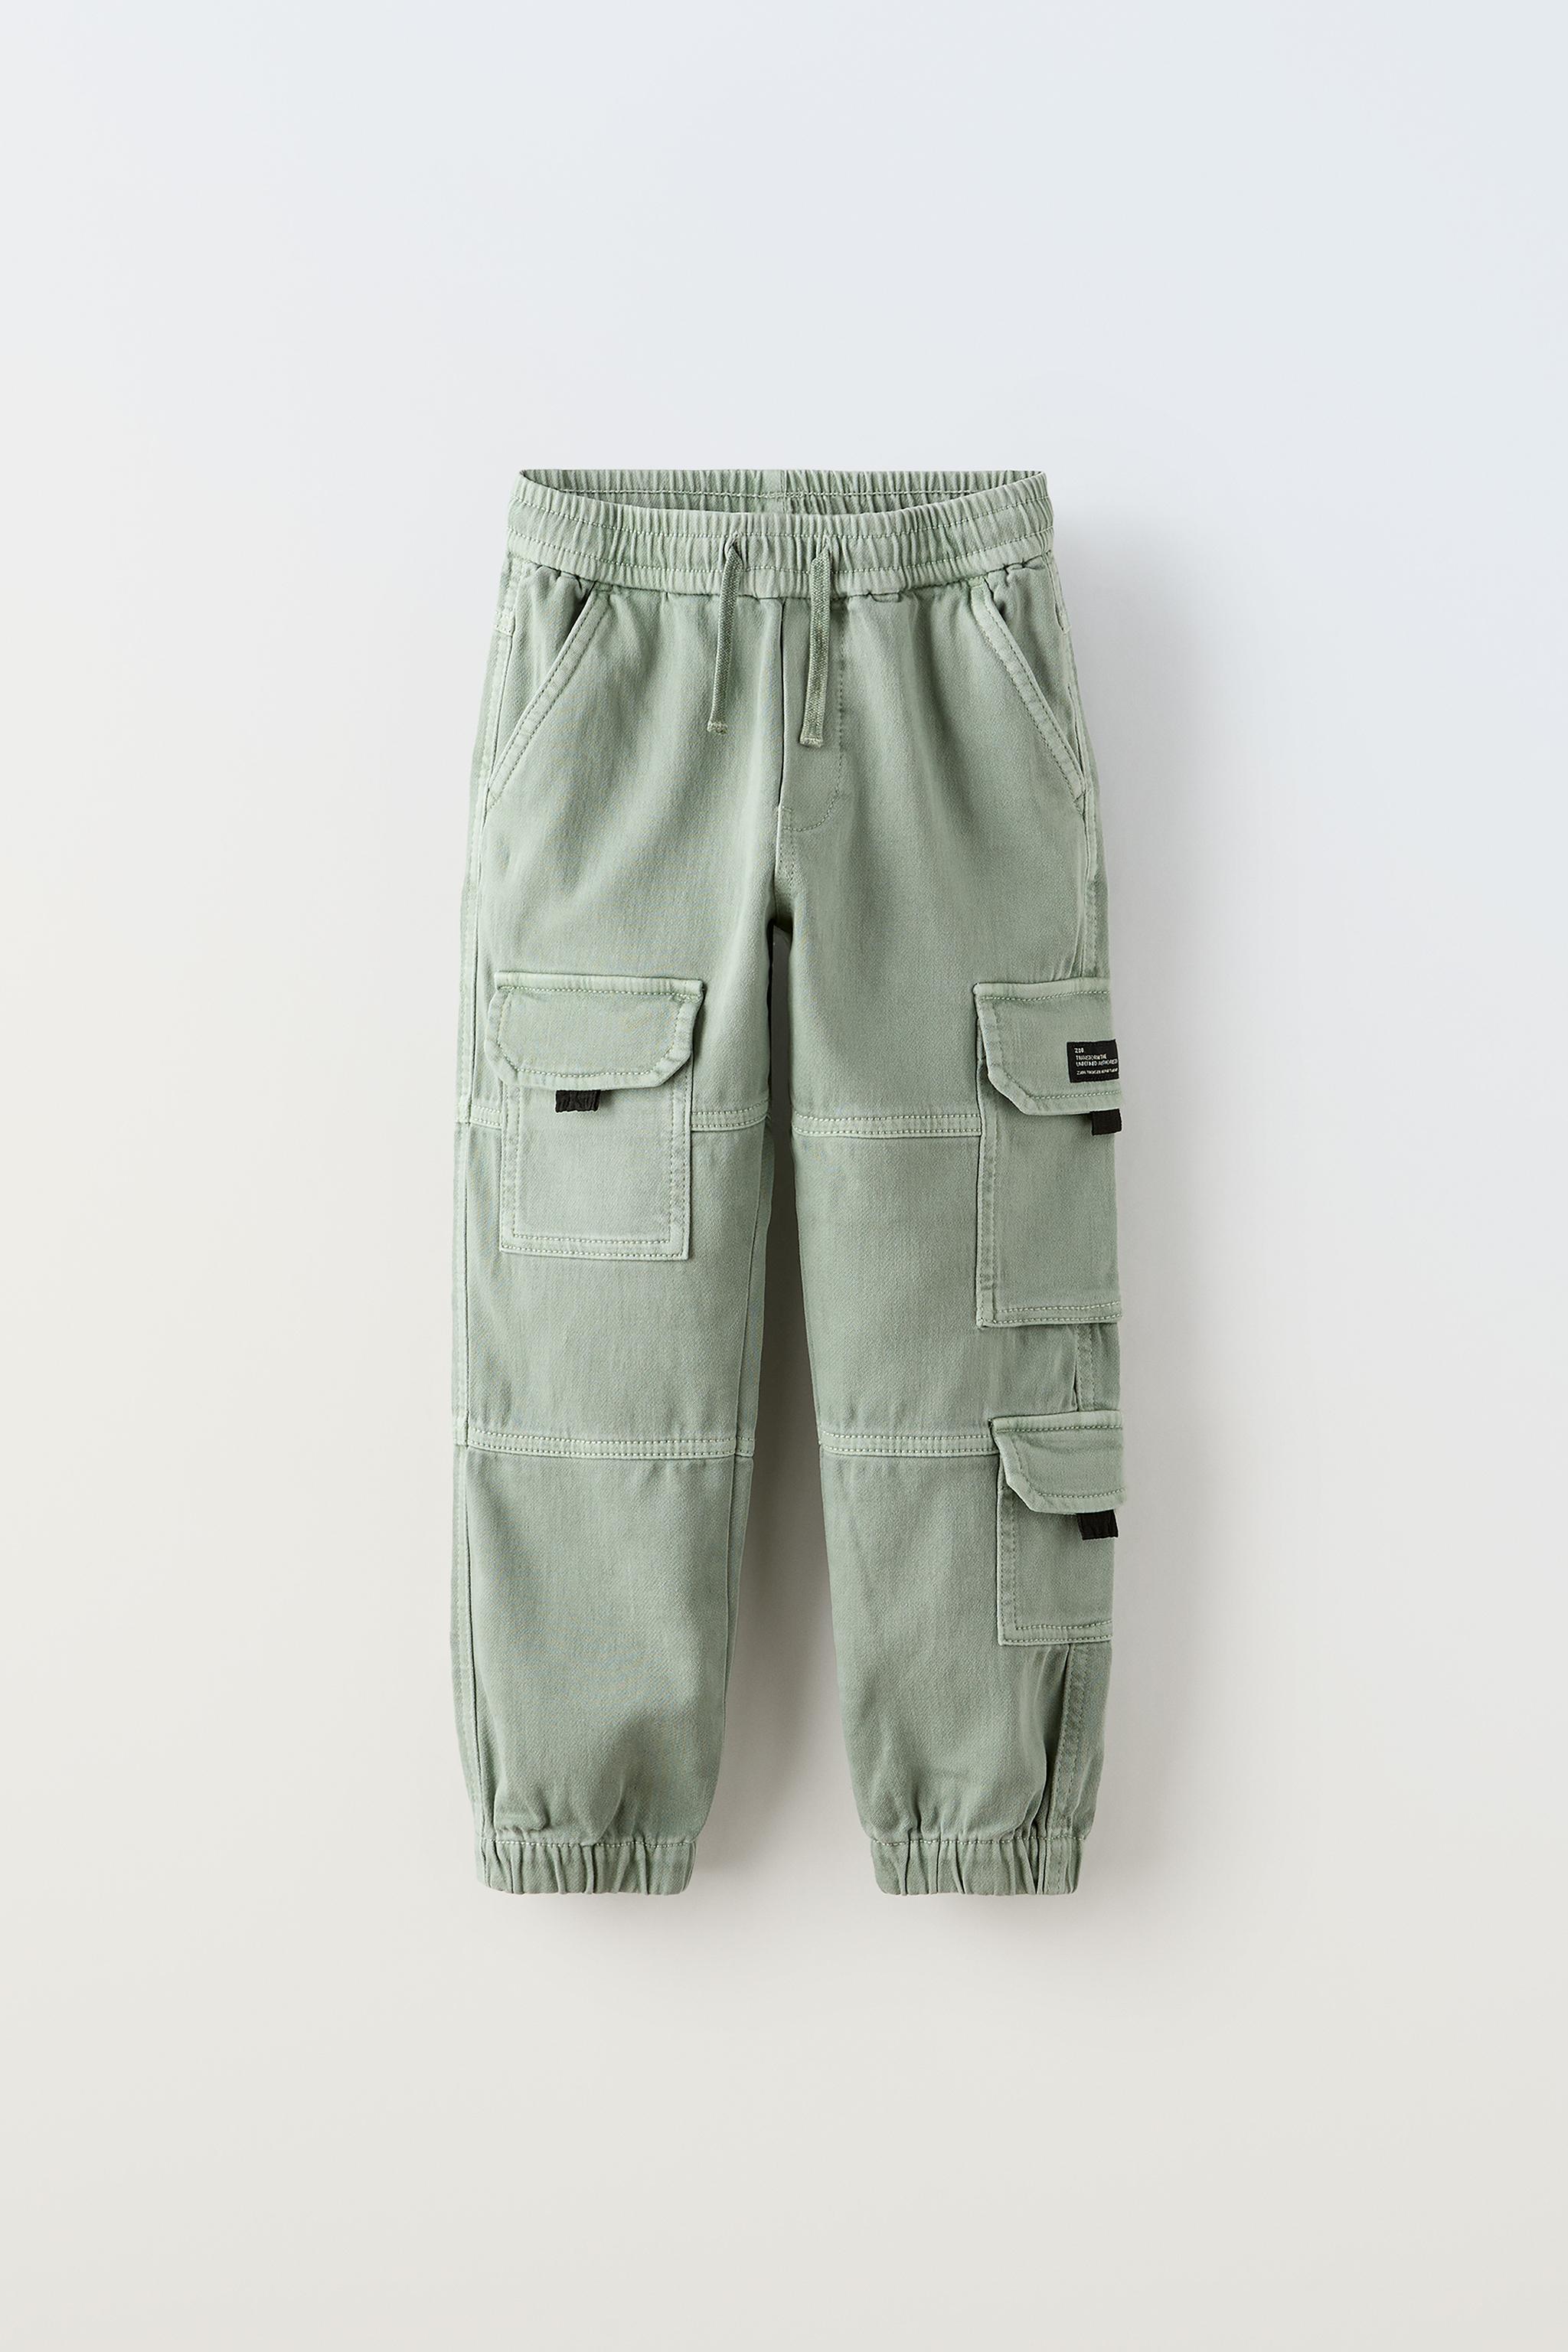 Kids Parachute Pants Cargo Pants Splash Pants ♥ Sizes 92-164